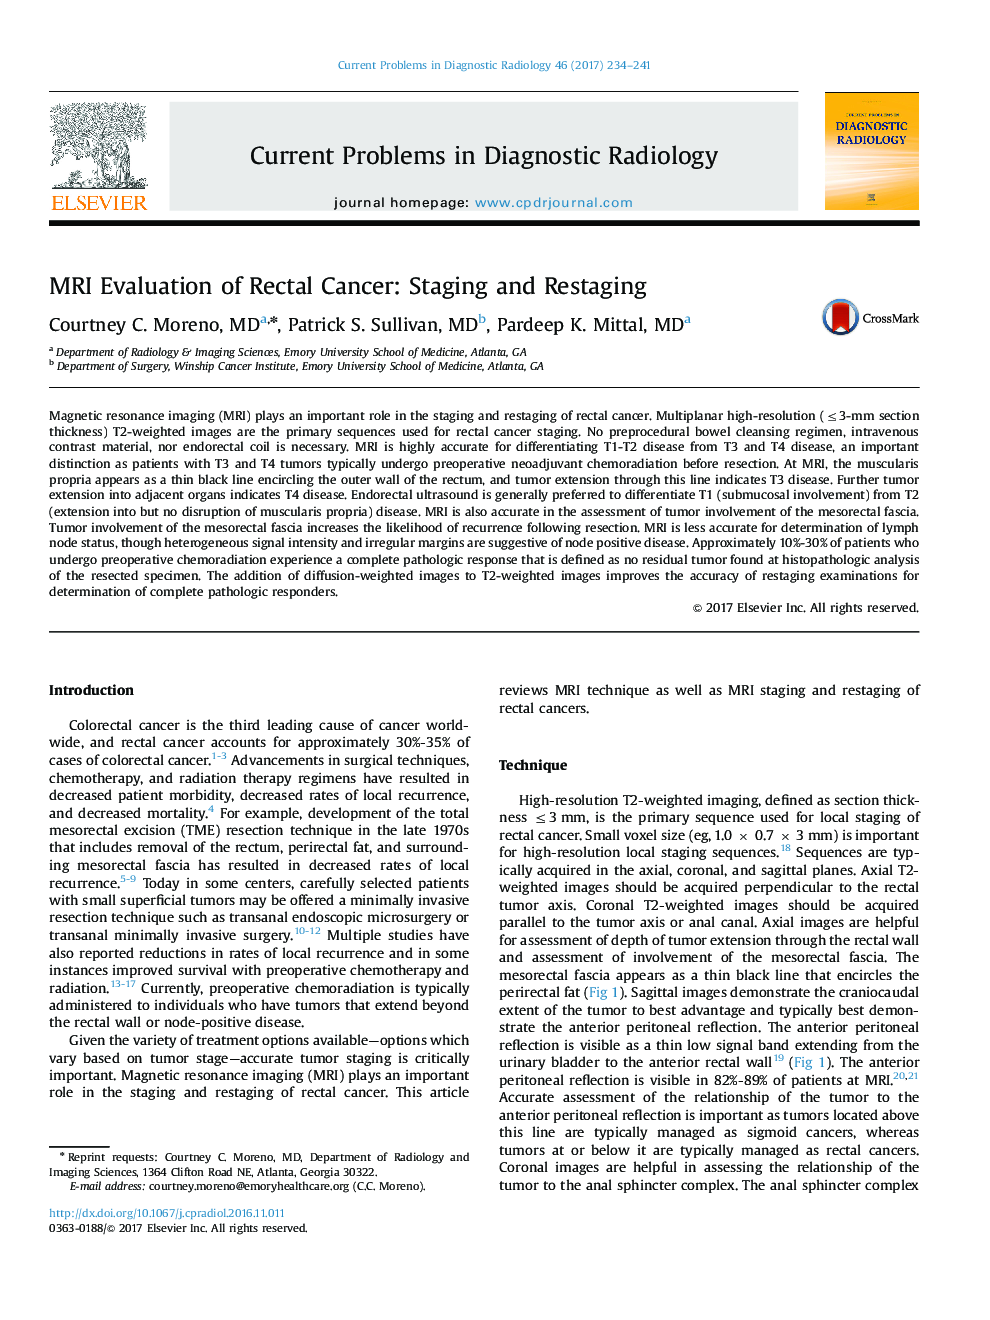 MRI Evaluation of Rectal Cancer: Staging and Restaging